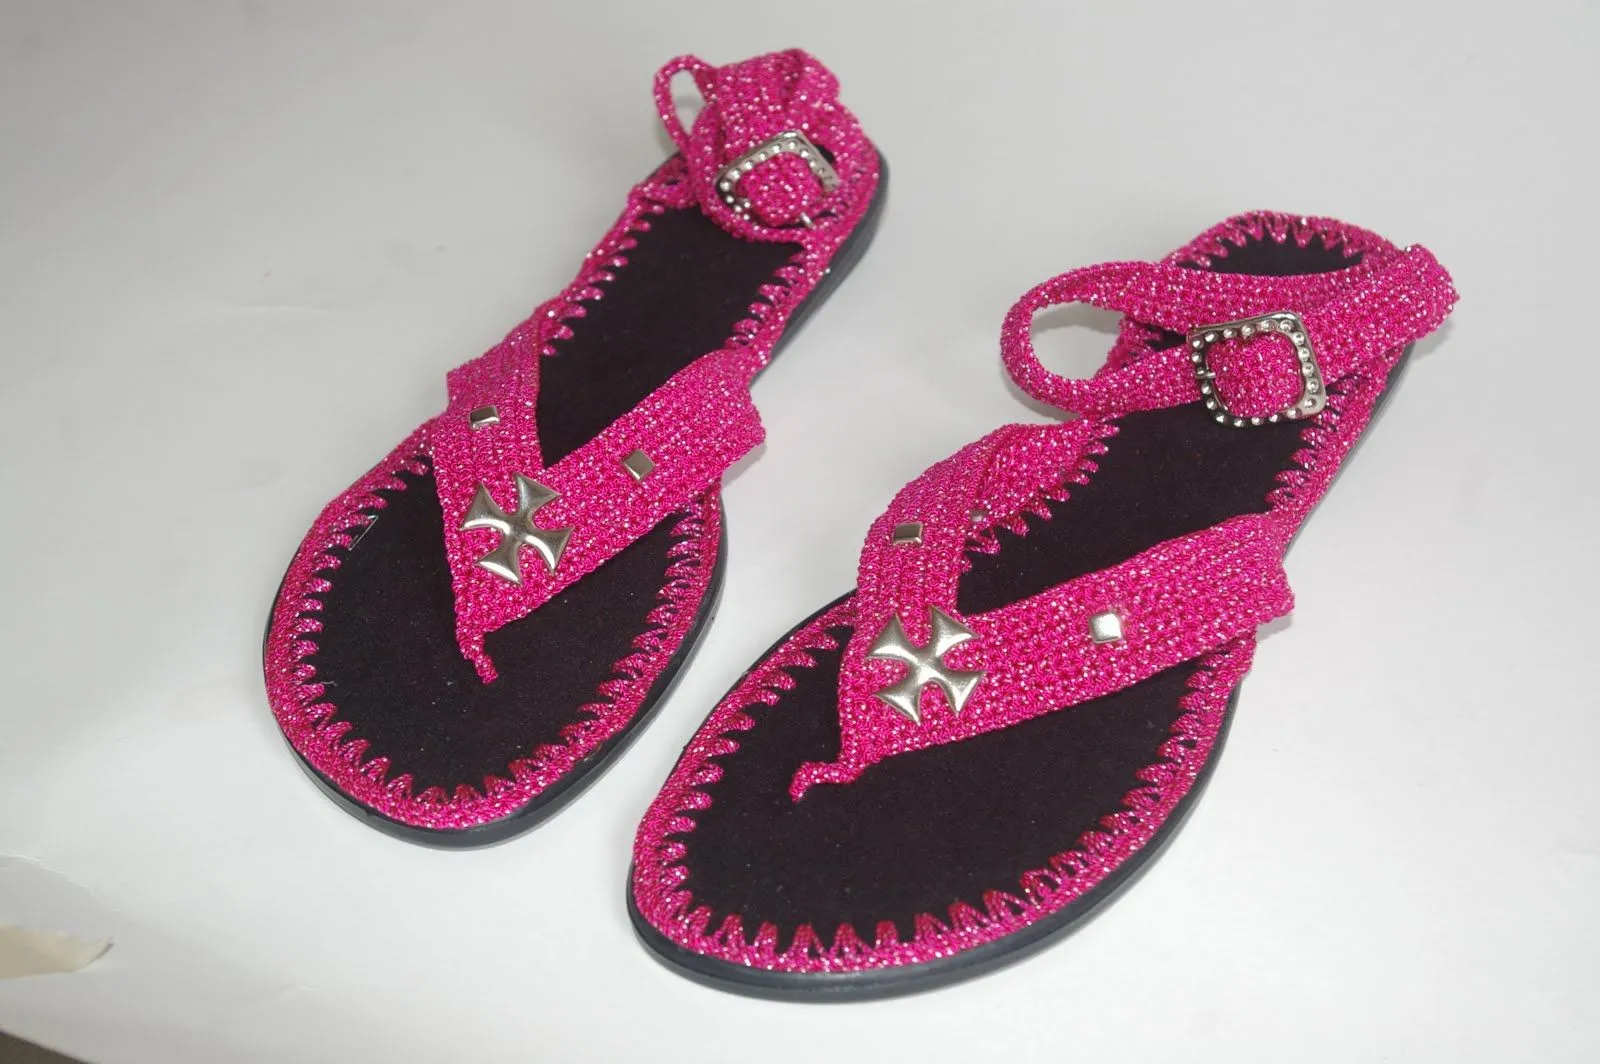 Sandalias tejidas a crochet con patrones - Imagui